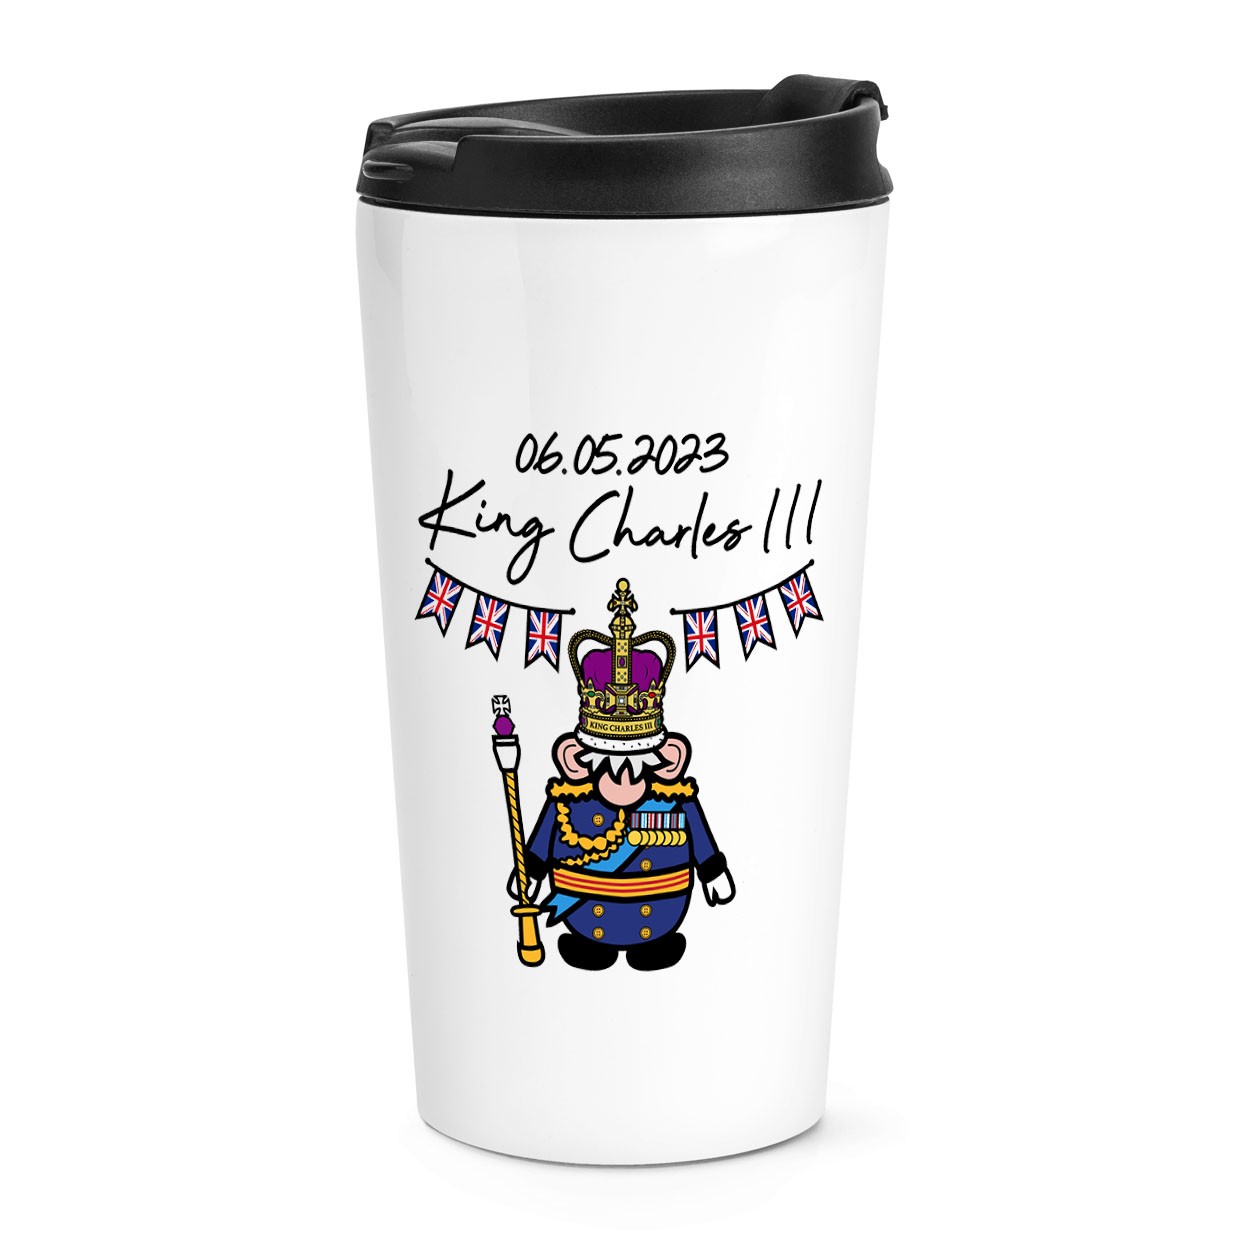 Gonk King Charles III Travel Mug Cup